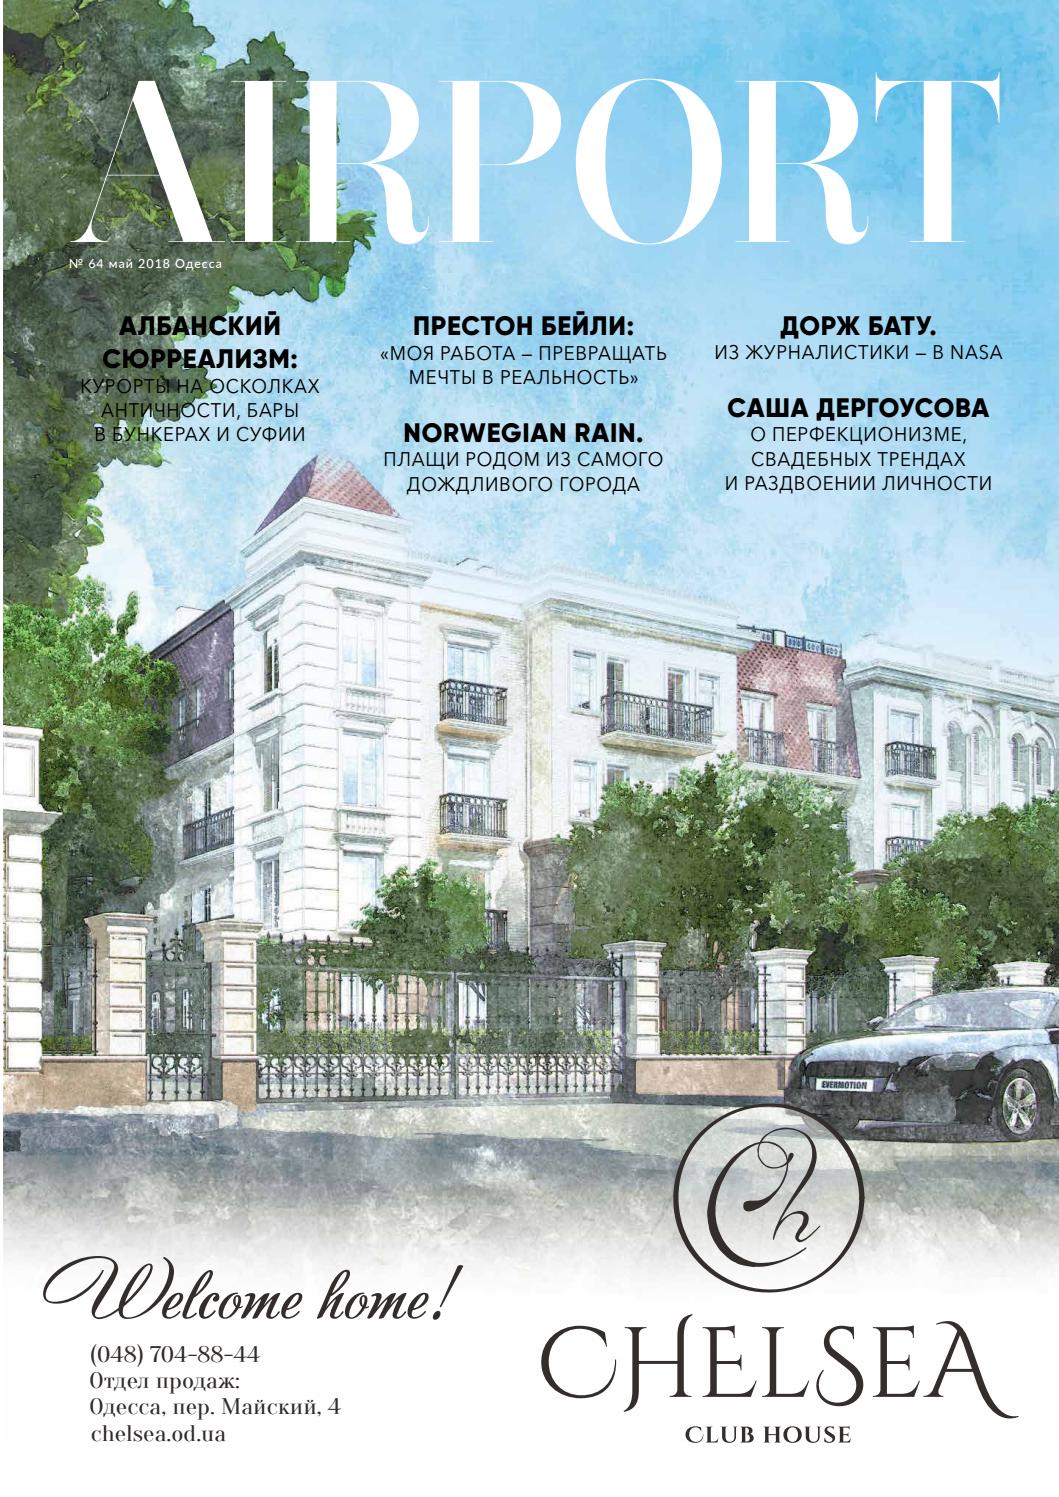 Salon De Jardin Design Luxe Génial May 18 by Airport Magazine Odessa issuu